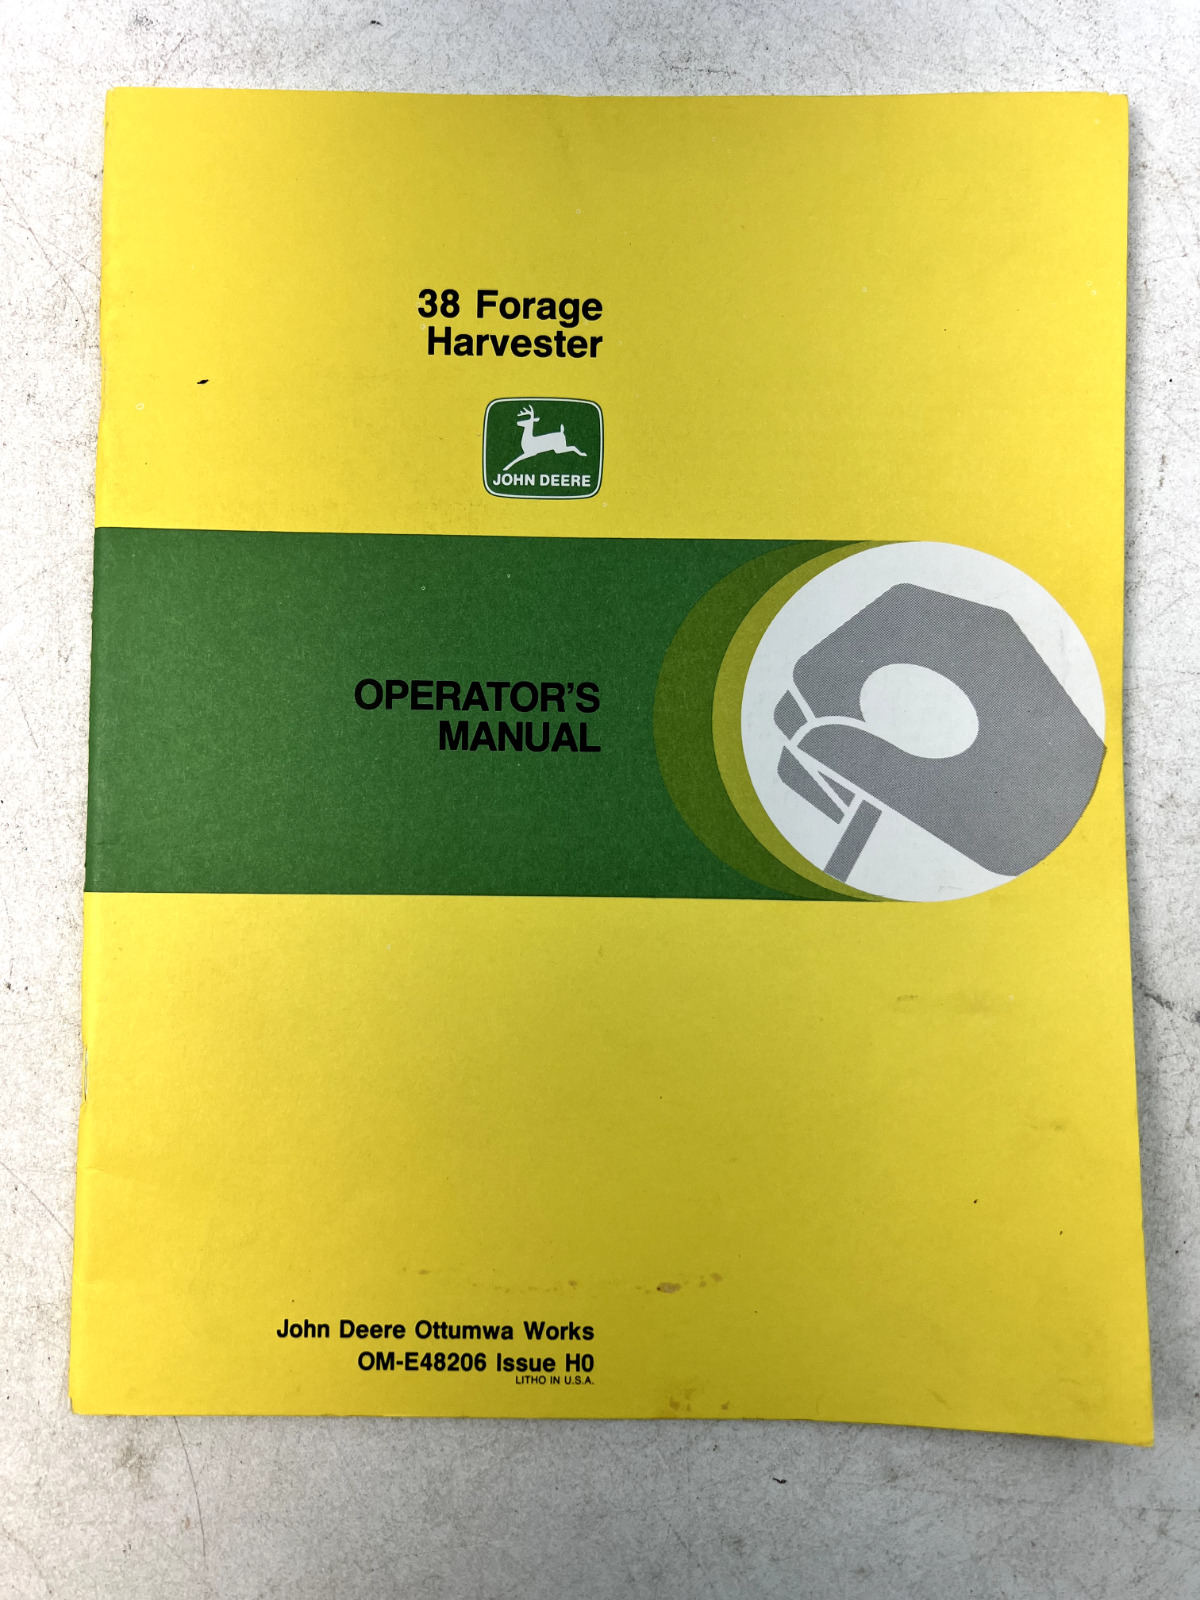 Vintage John Deere 38 Forage Harvester Operator's Manual